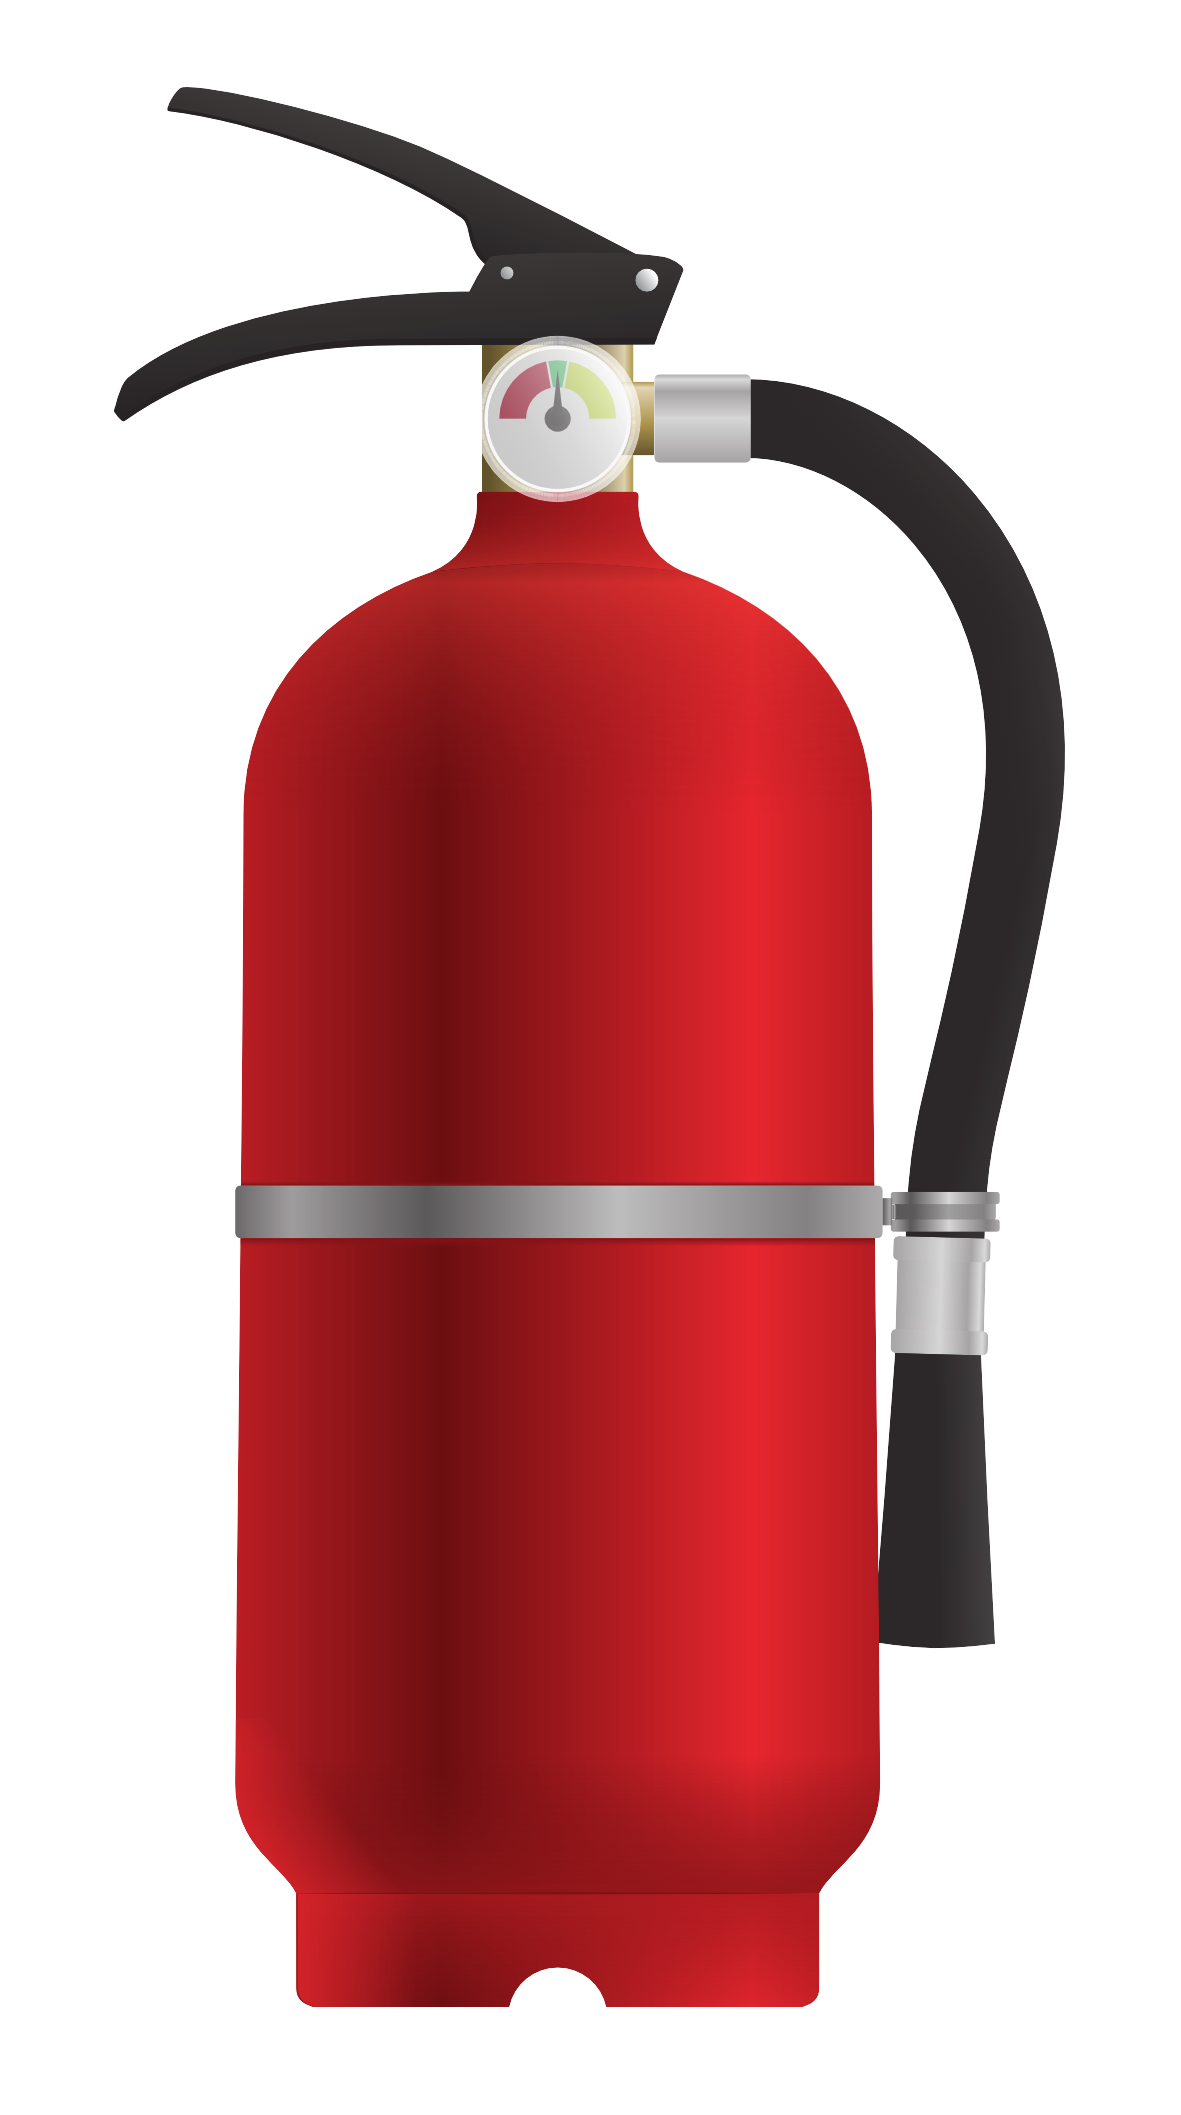 Extinguisher Download PNG Image